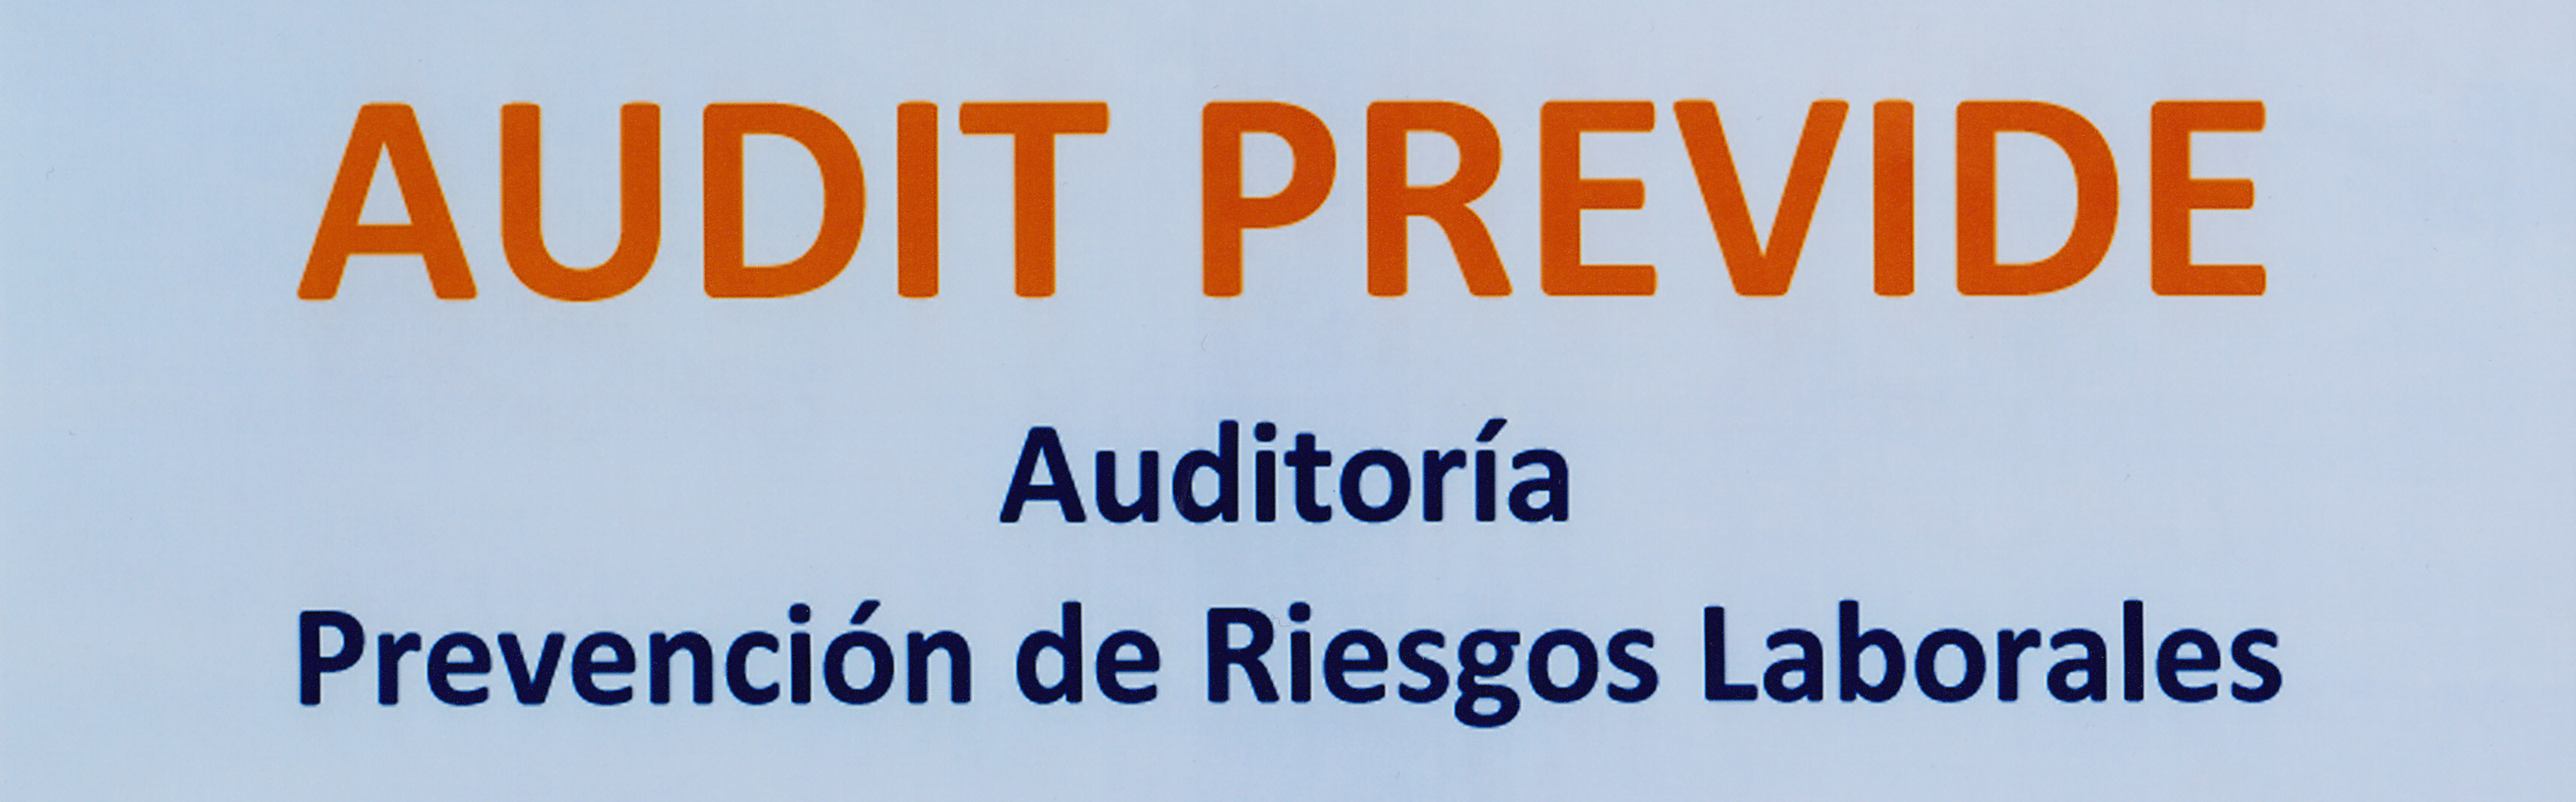 AUDIT PREVIDE | Auditoria Prevencion de Riesgos Laborales 